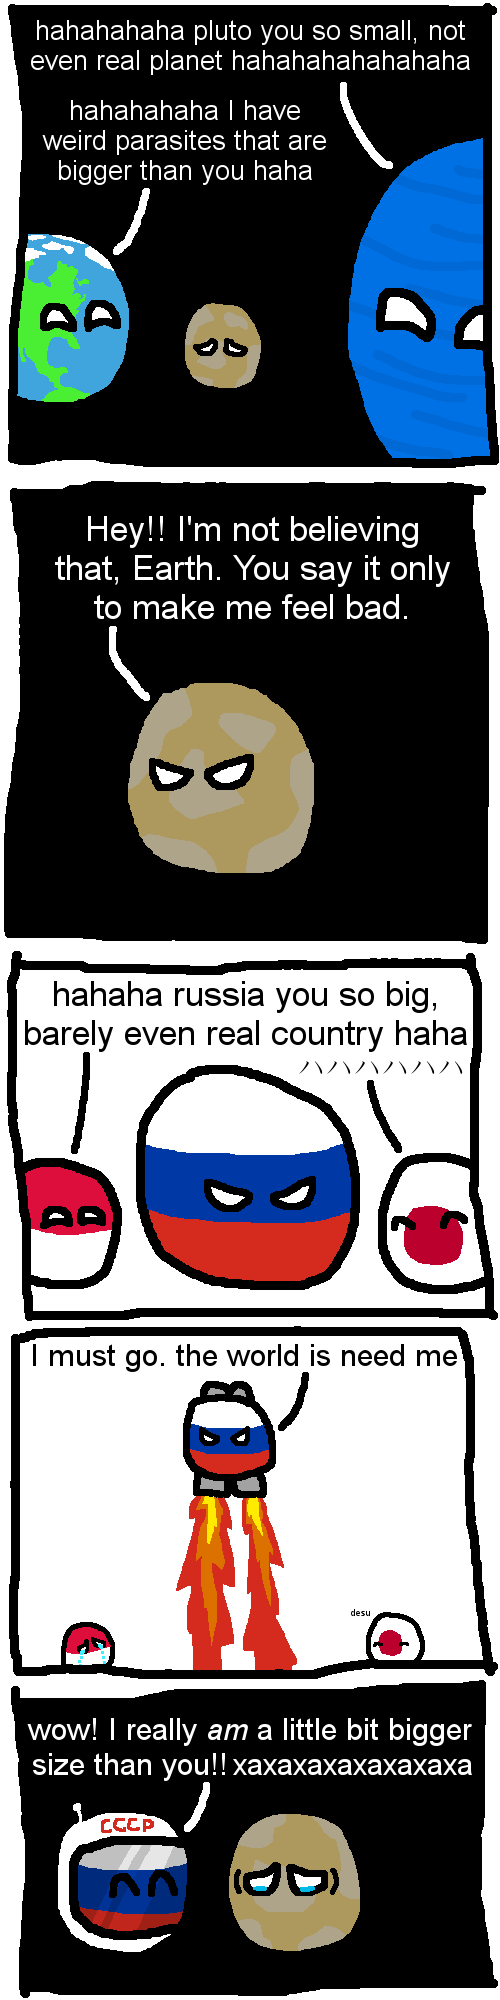 Russia countryhumans - countryhumans post - Imgur